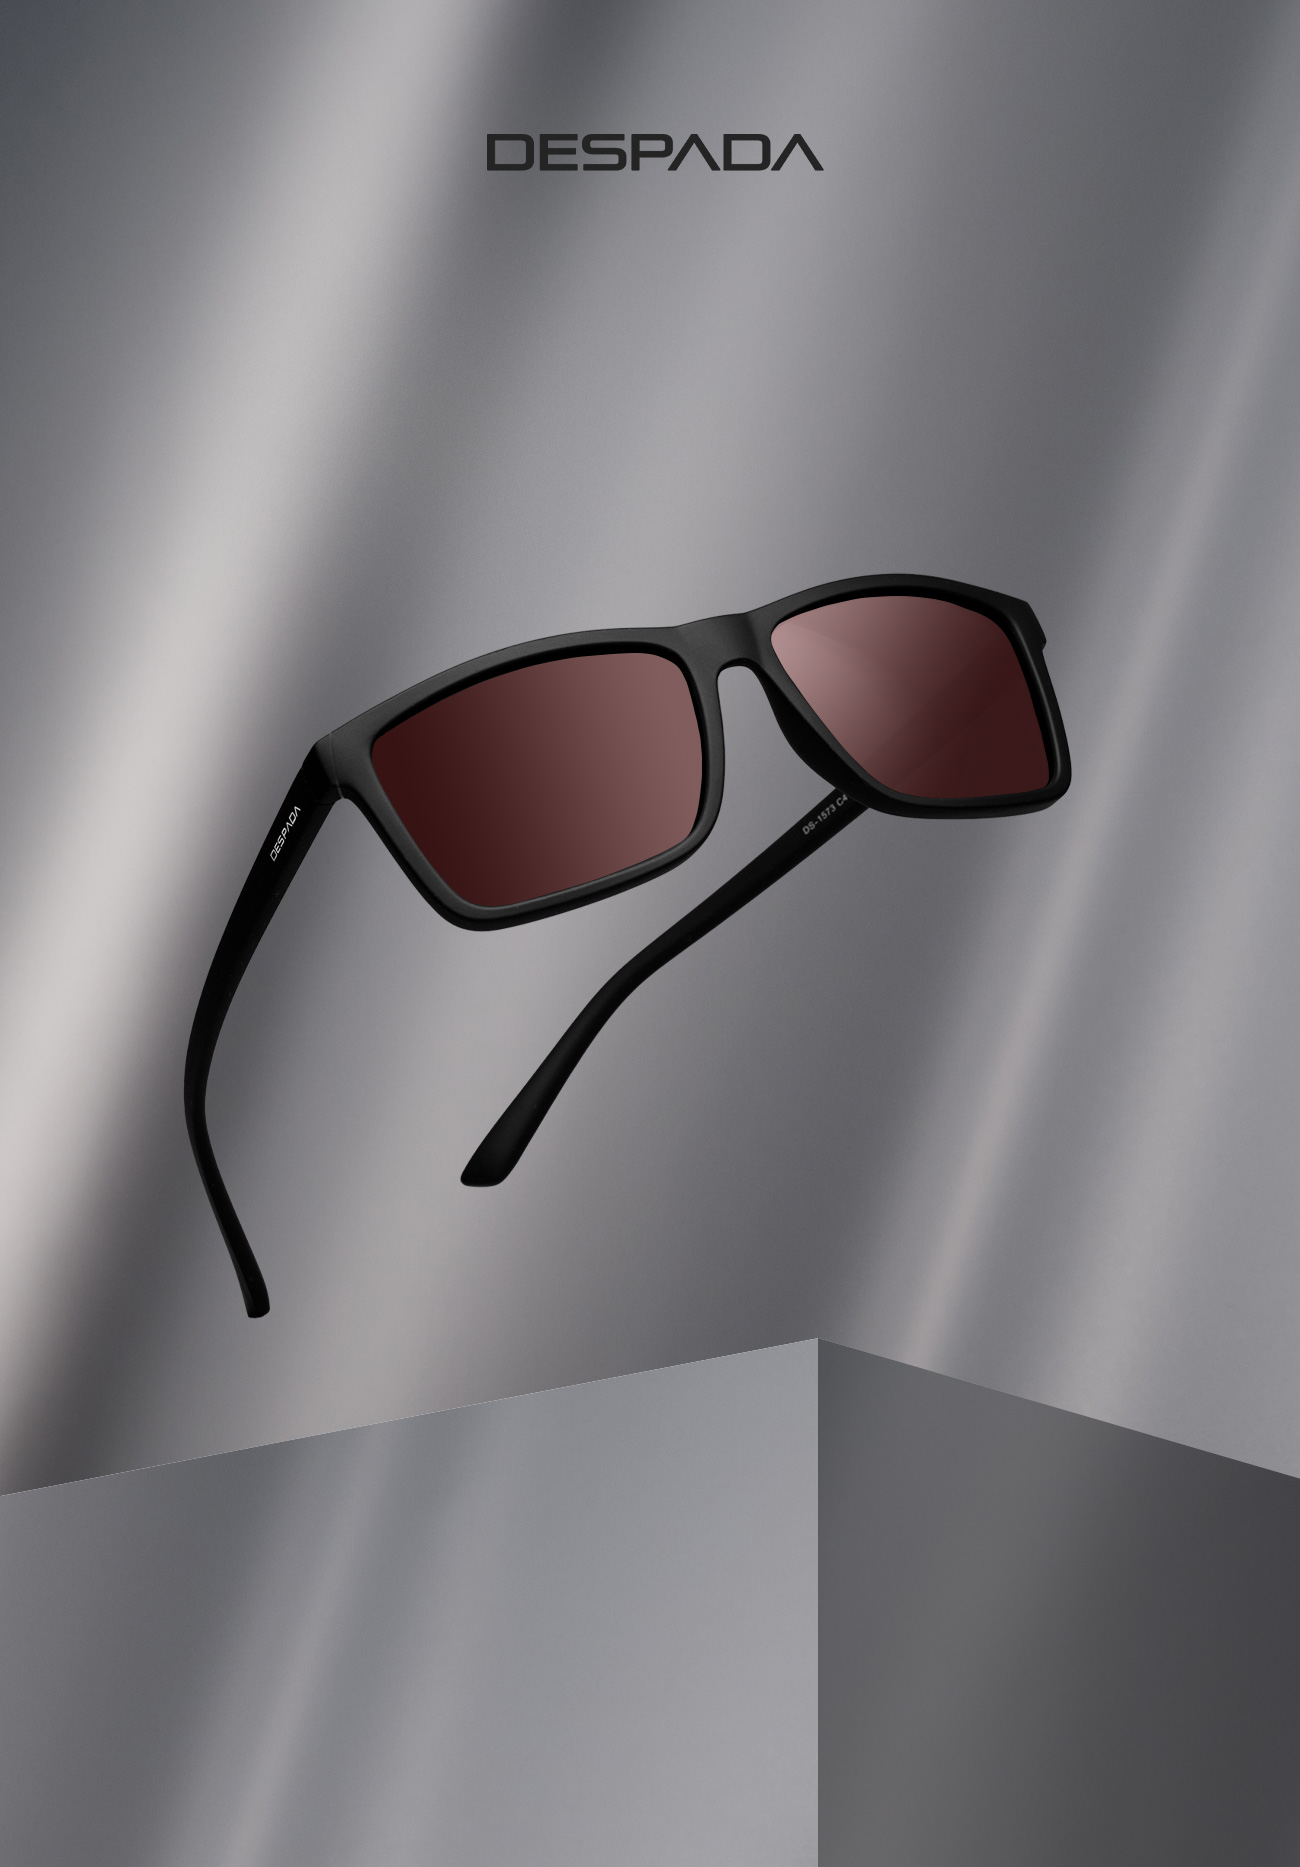 Despada Polarized Sunglasses